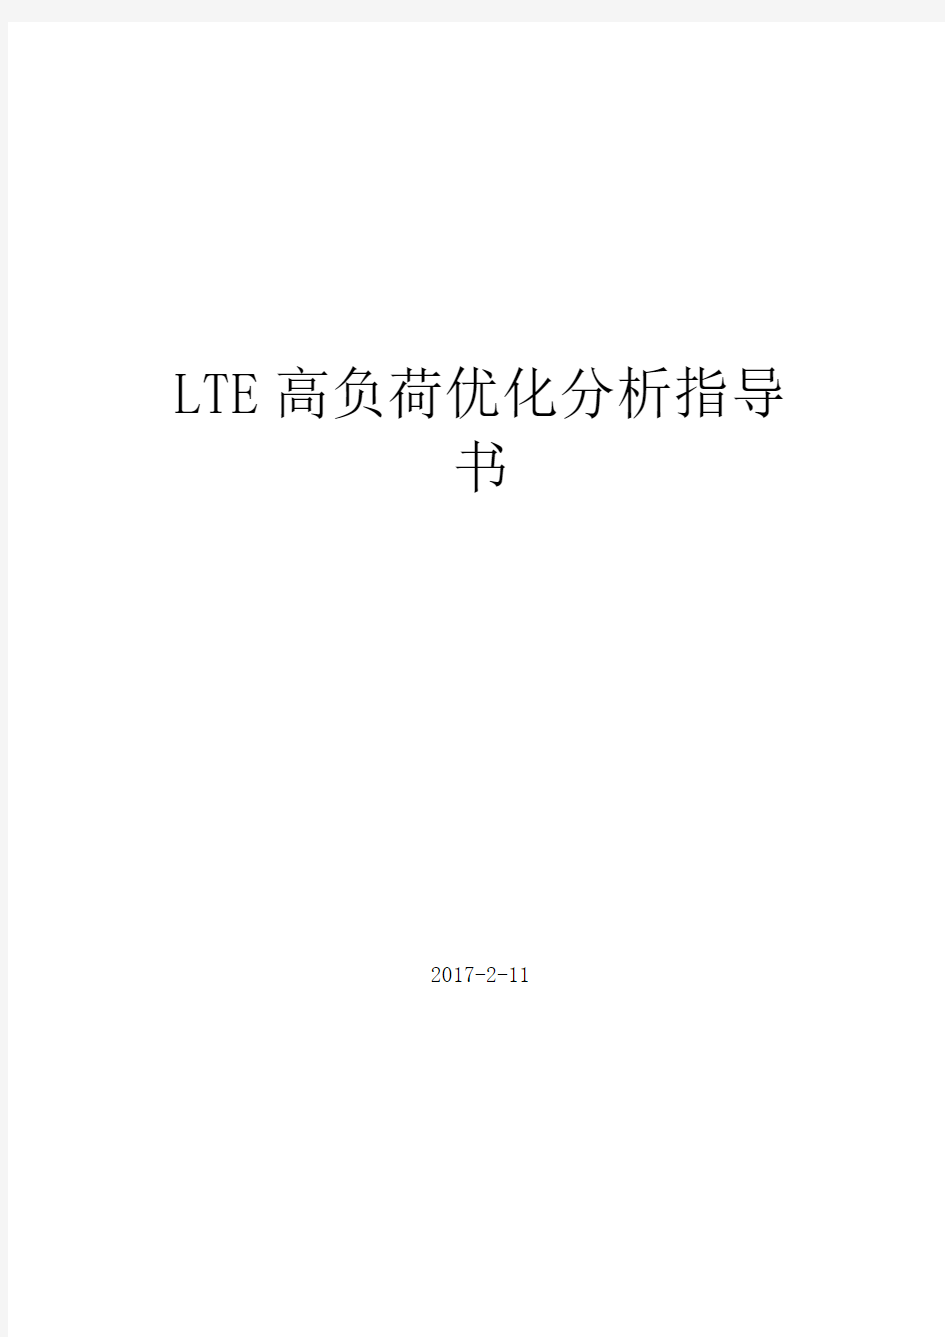 LTE高负荷优化分析指导书